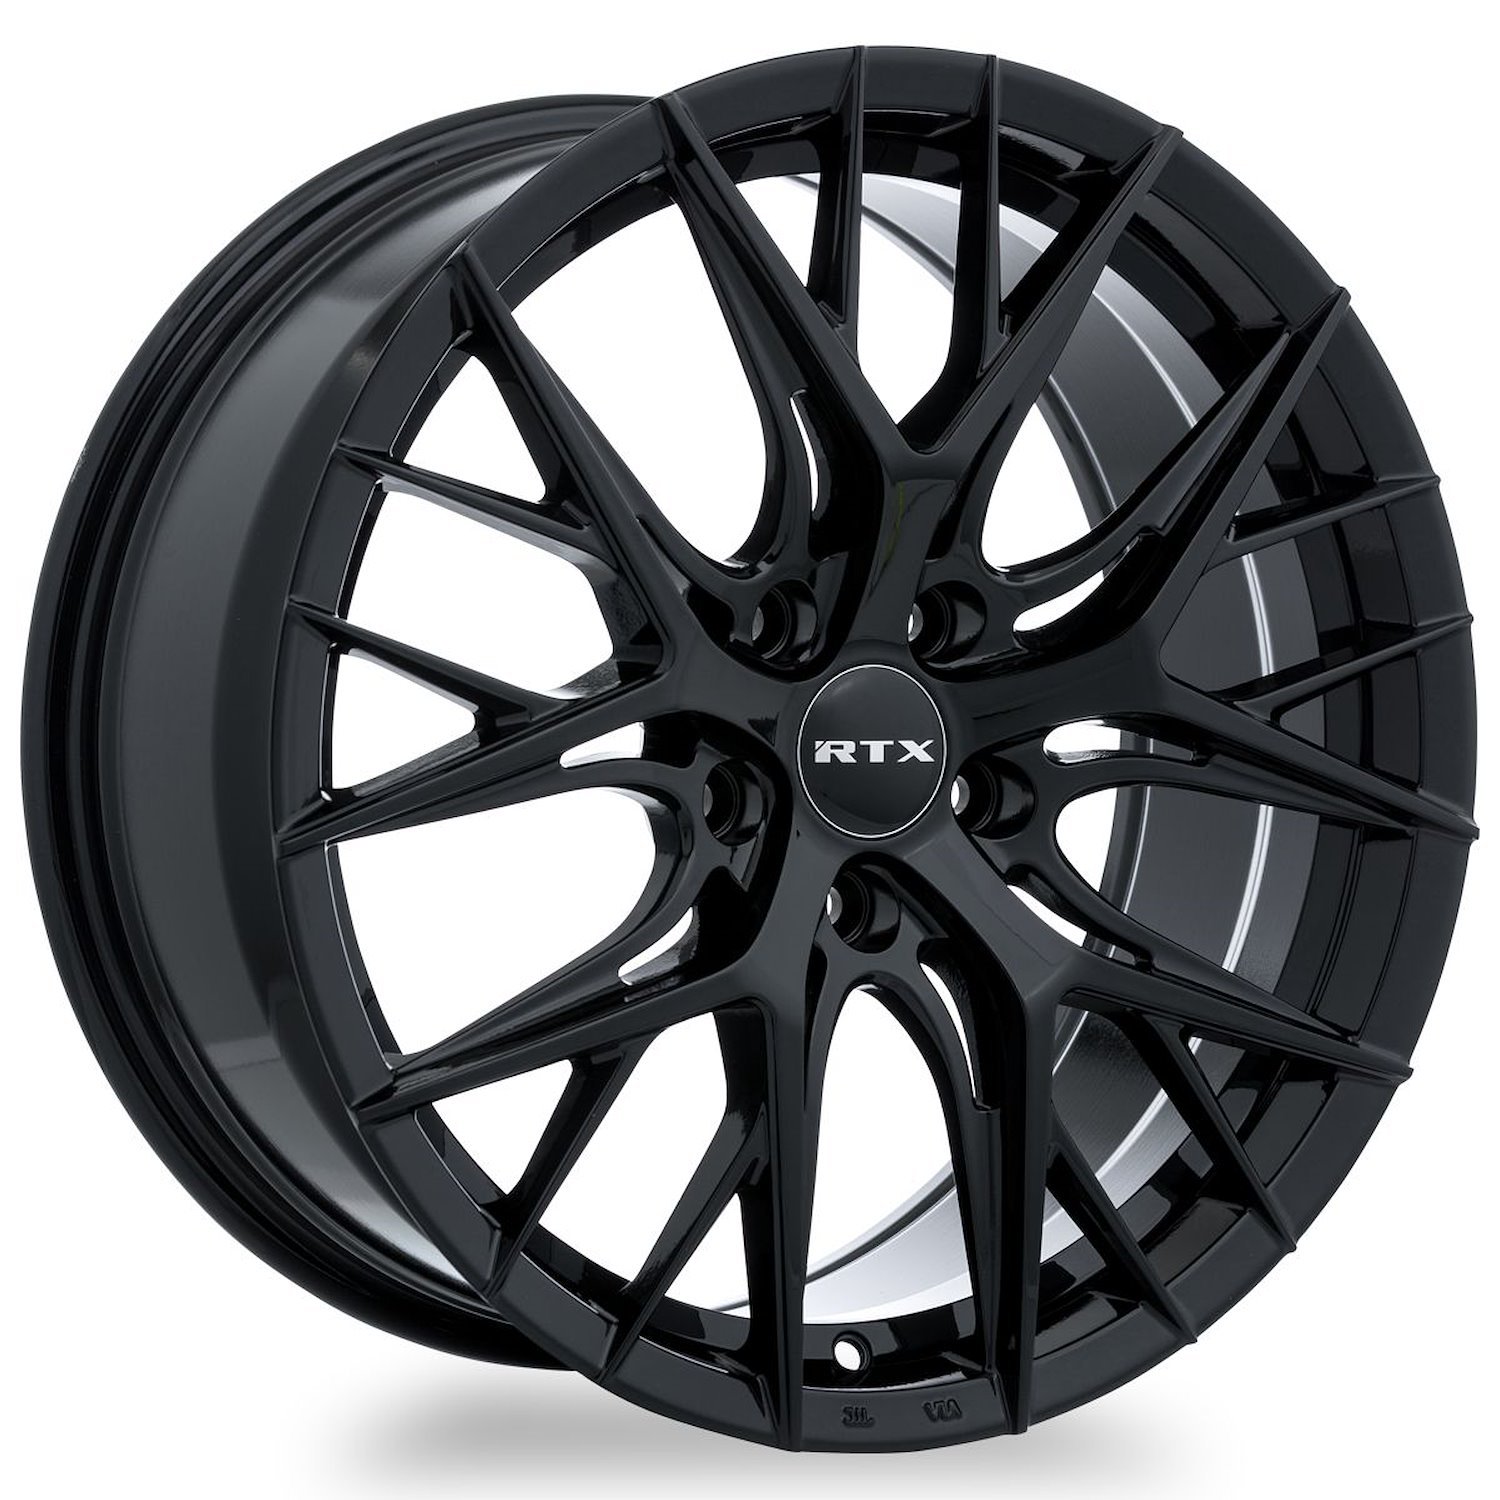 083041 RTX-Series Valkyrie Wheel [Size: 18" x 8"] Gloss Black Finish